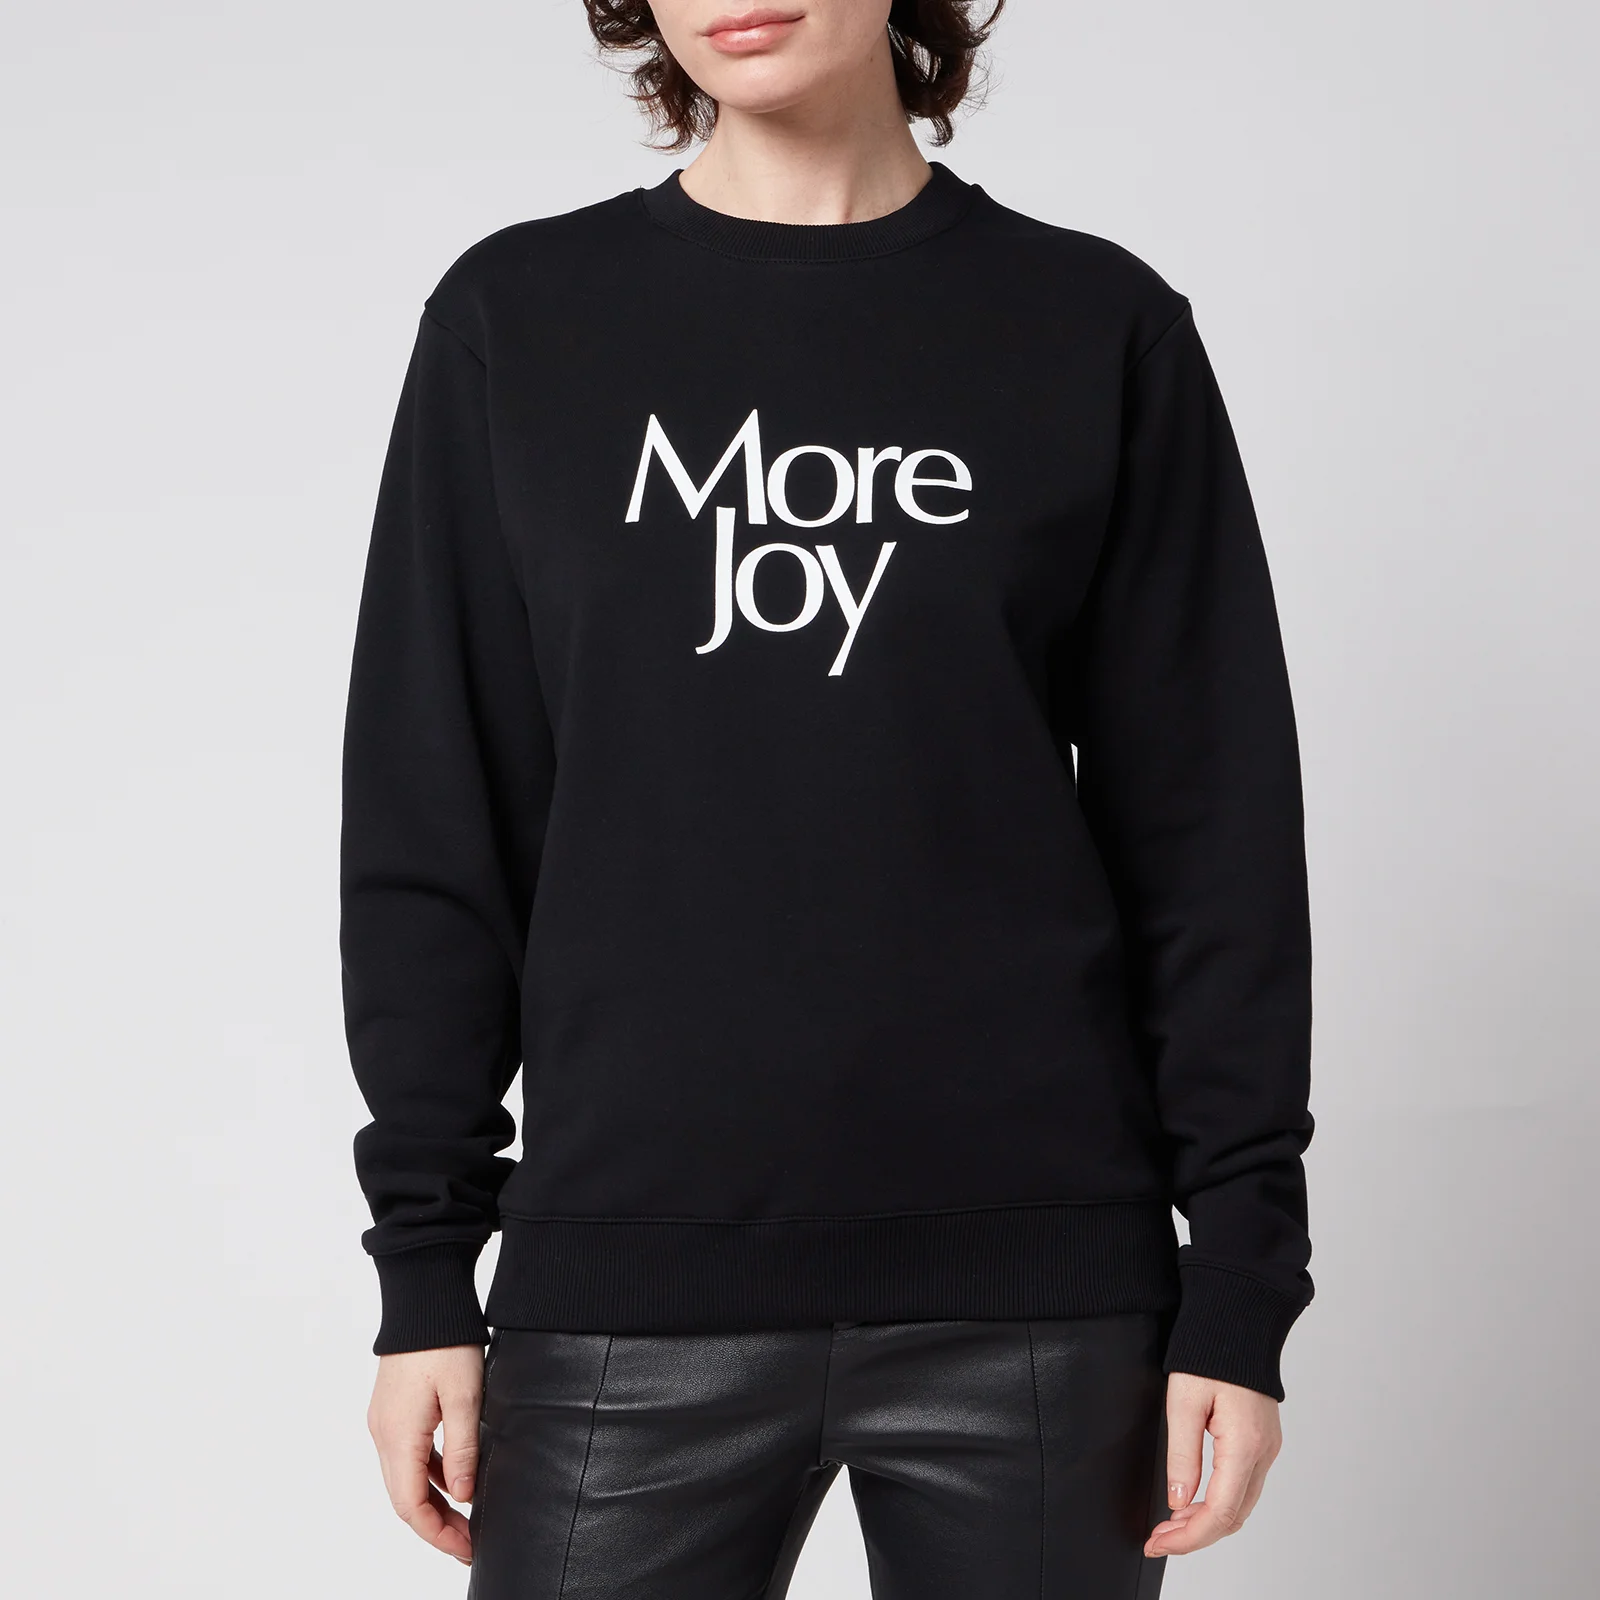 More Joy Women's More Joy Sweatshirt - Black Image 1